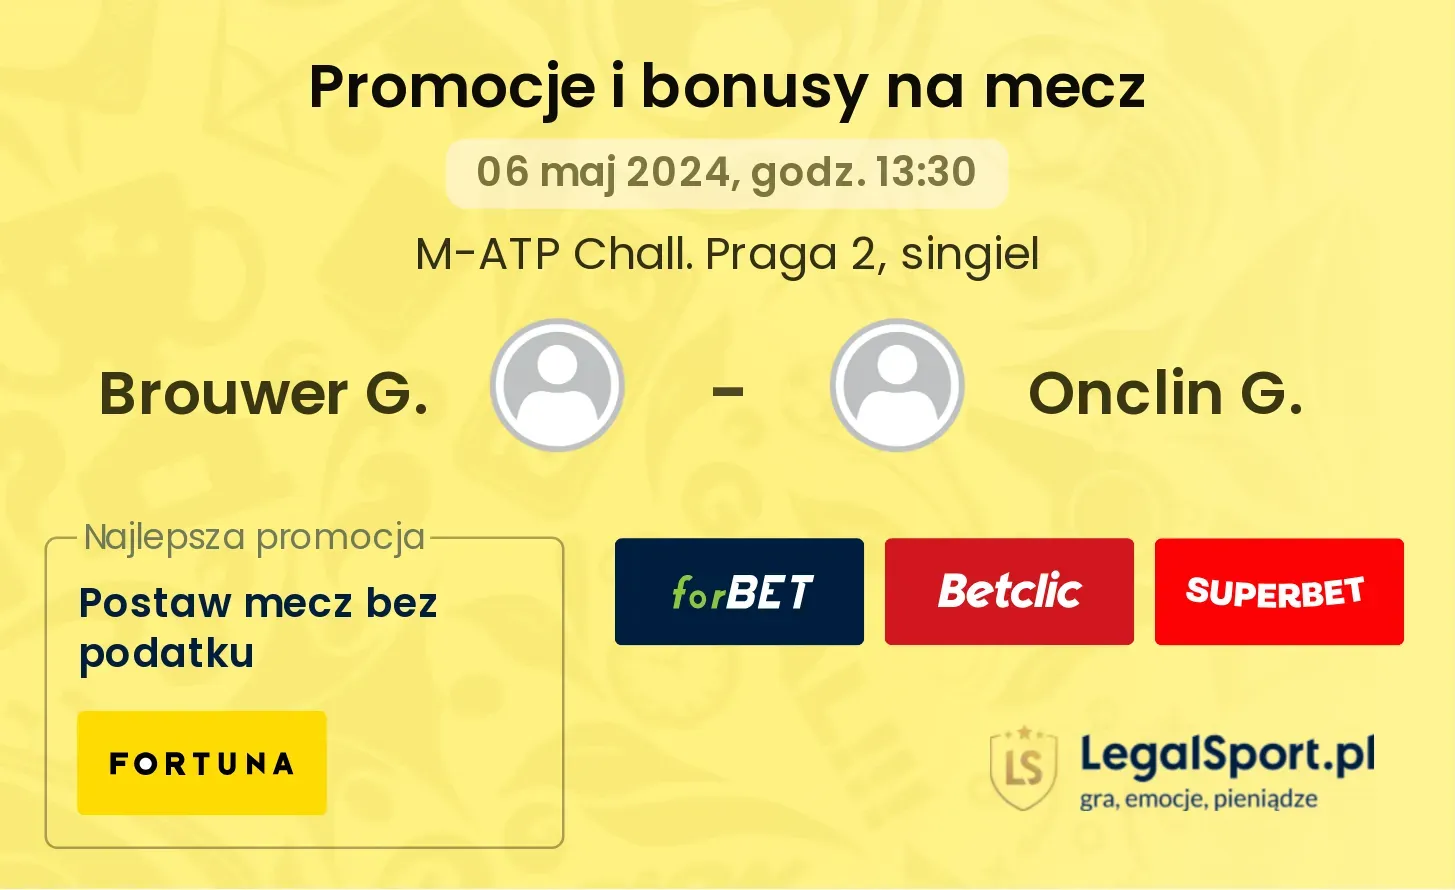 Brouwer G. - Onclin G. promocje bonusy na mecz